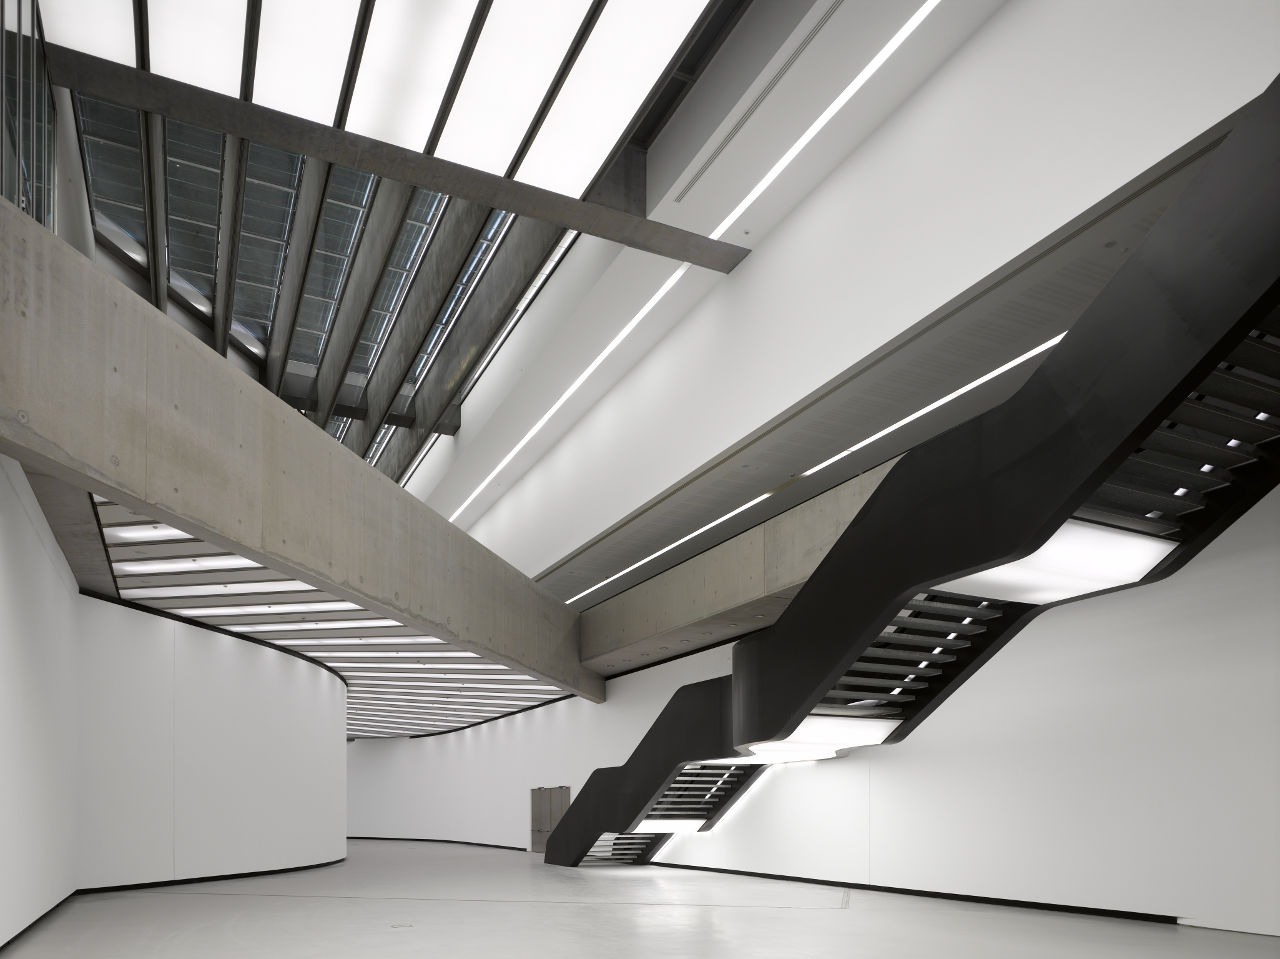 Gallery stairs of Zaha Hadid's MAXXI- National Museum of XXI Century Arts